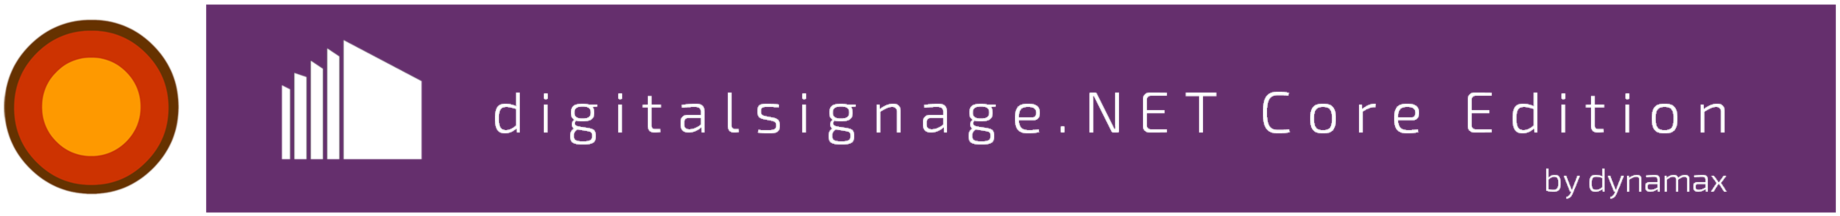 digitalsignage.net core banner